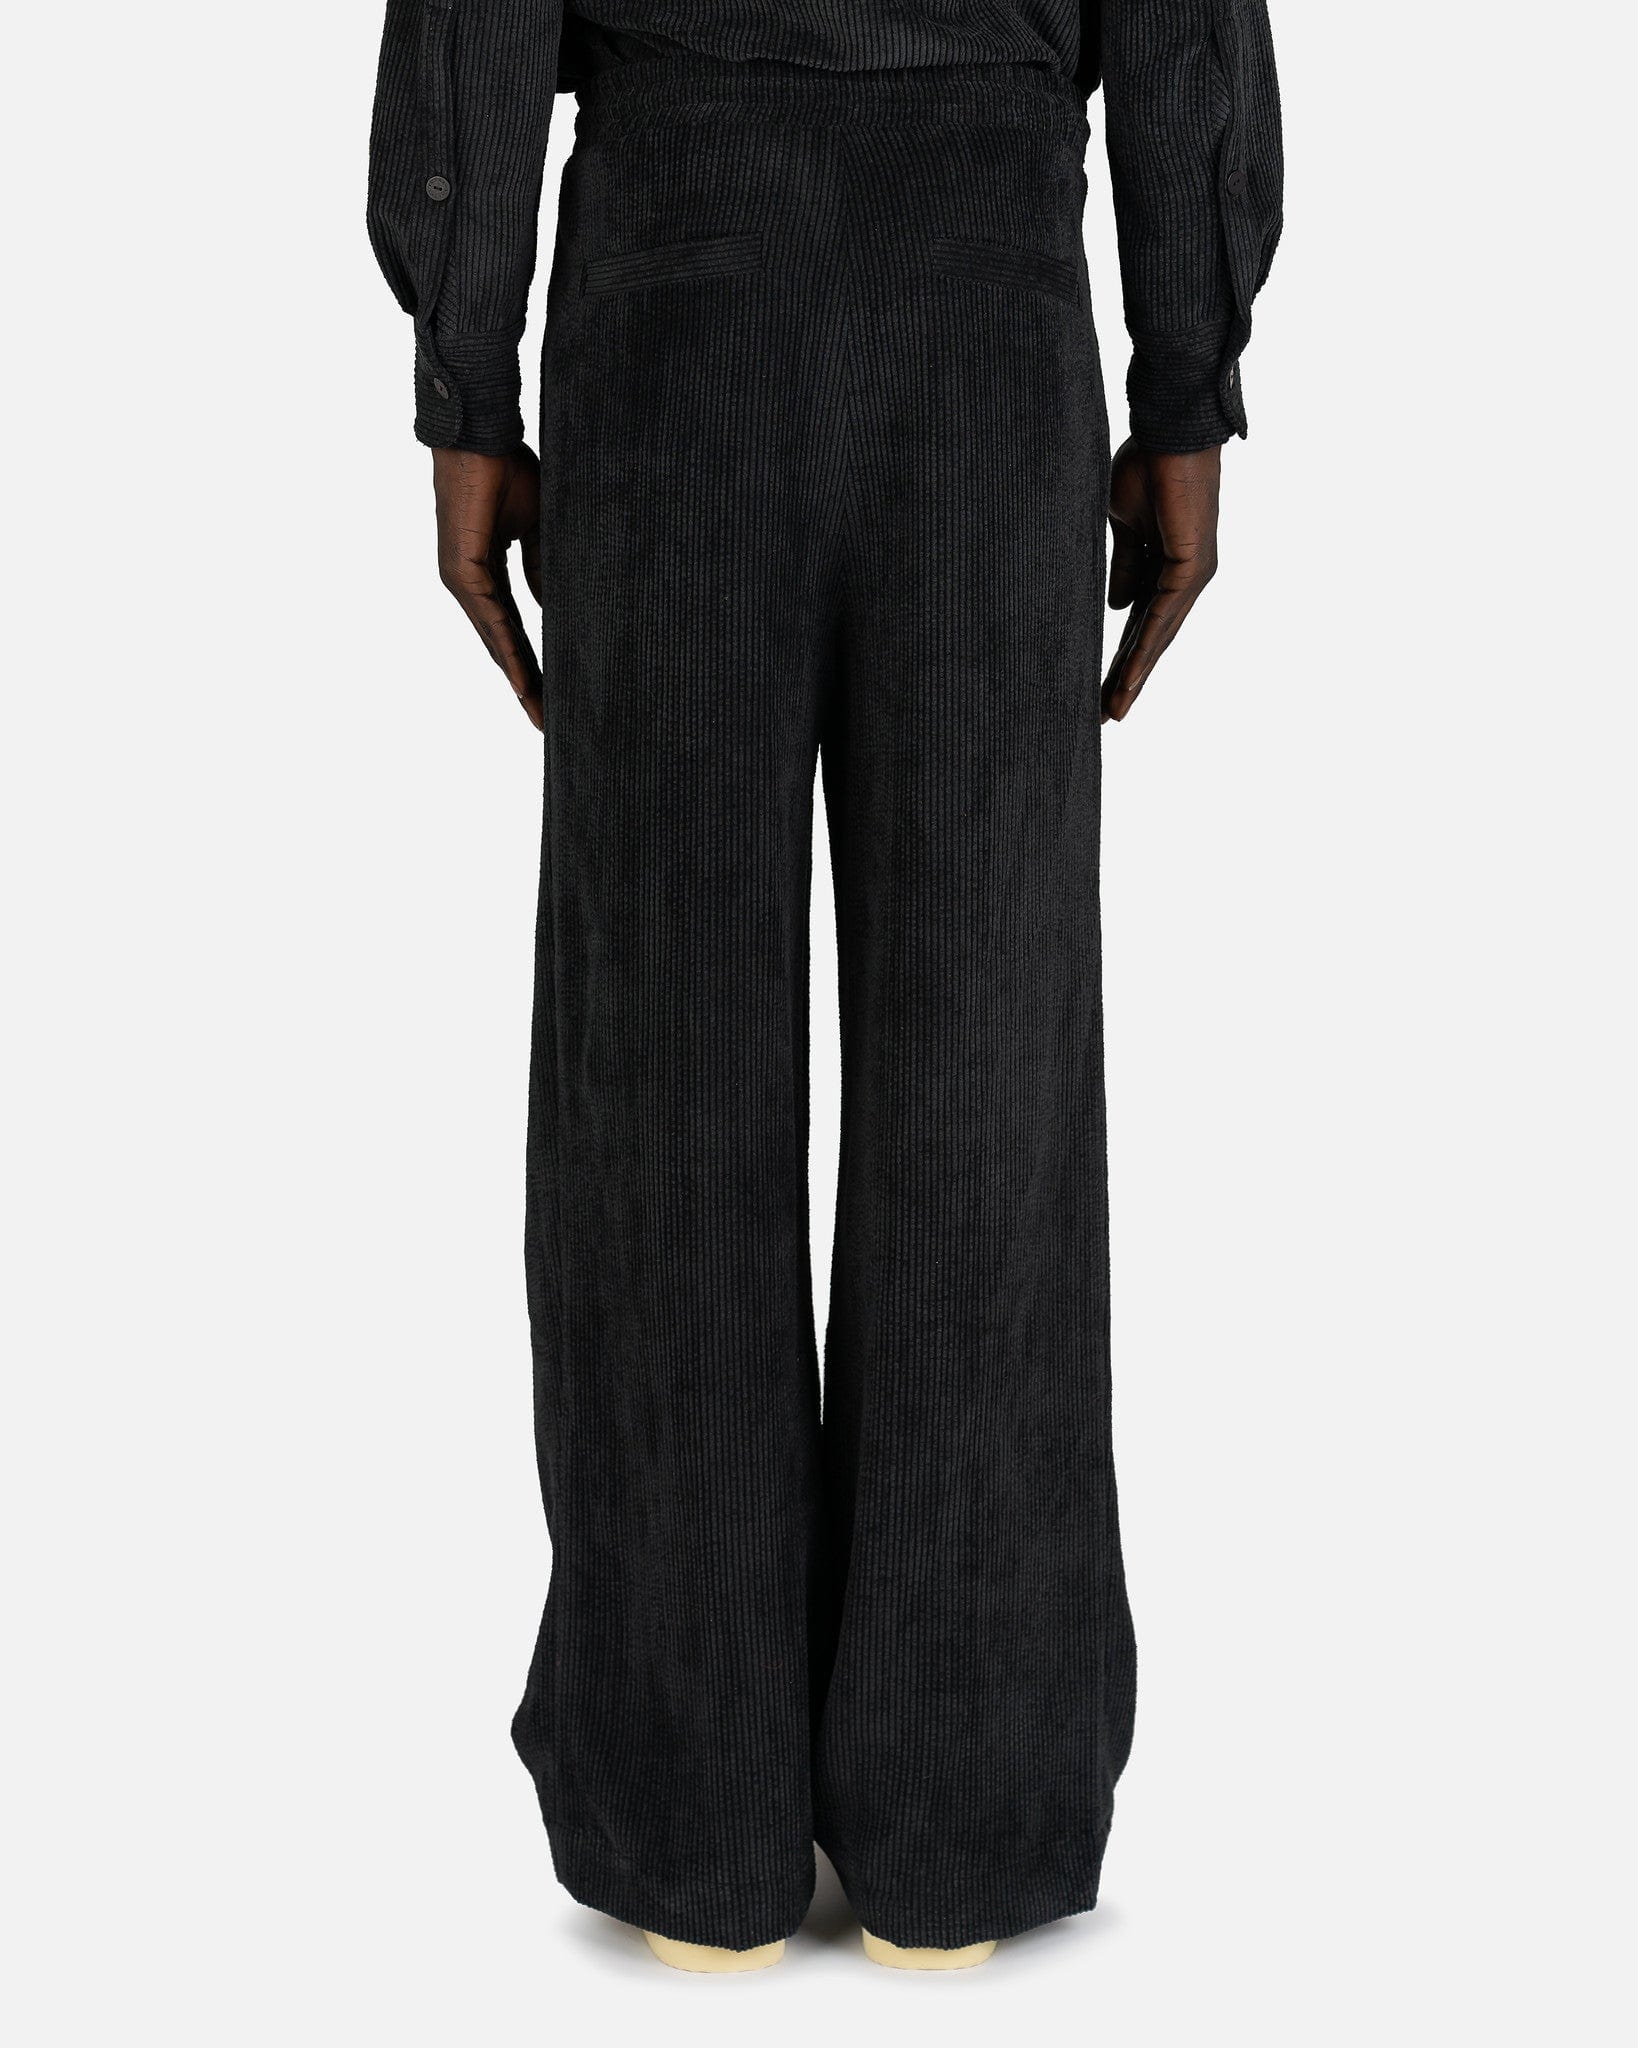 Eckhaus Latta Men's Pants Pebble Trouser in Faded Black